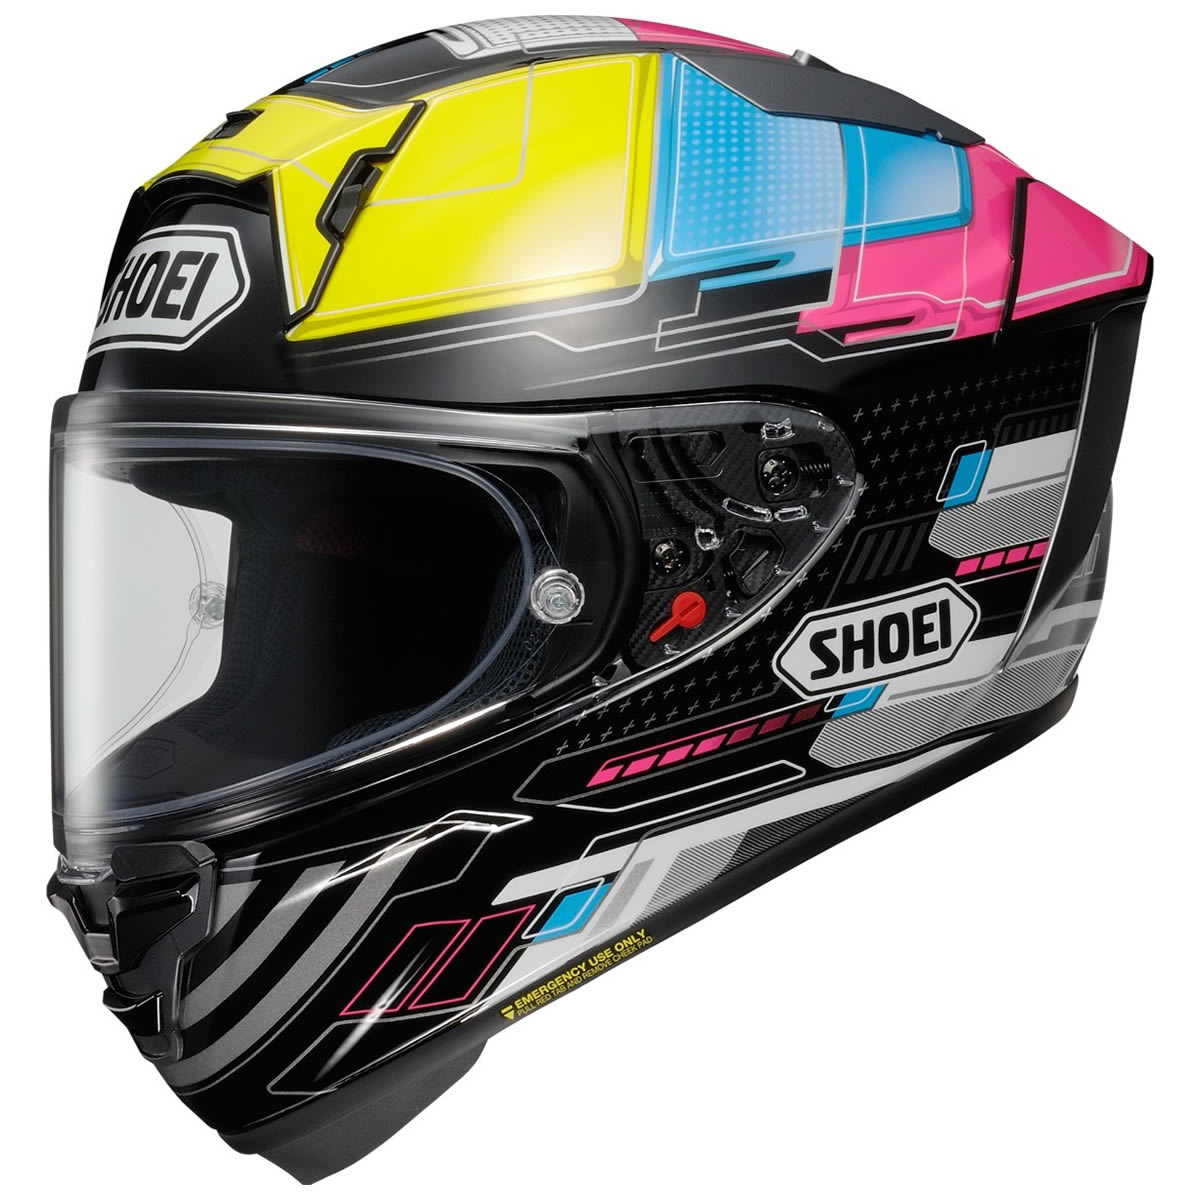 Shoei X-SPR Pro Proxy Helm, schwarz-gelb-blau-pink